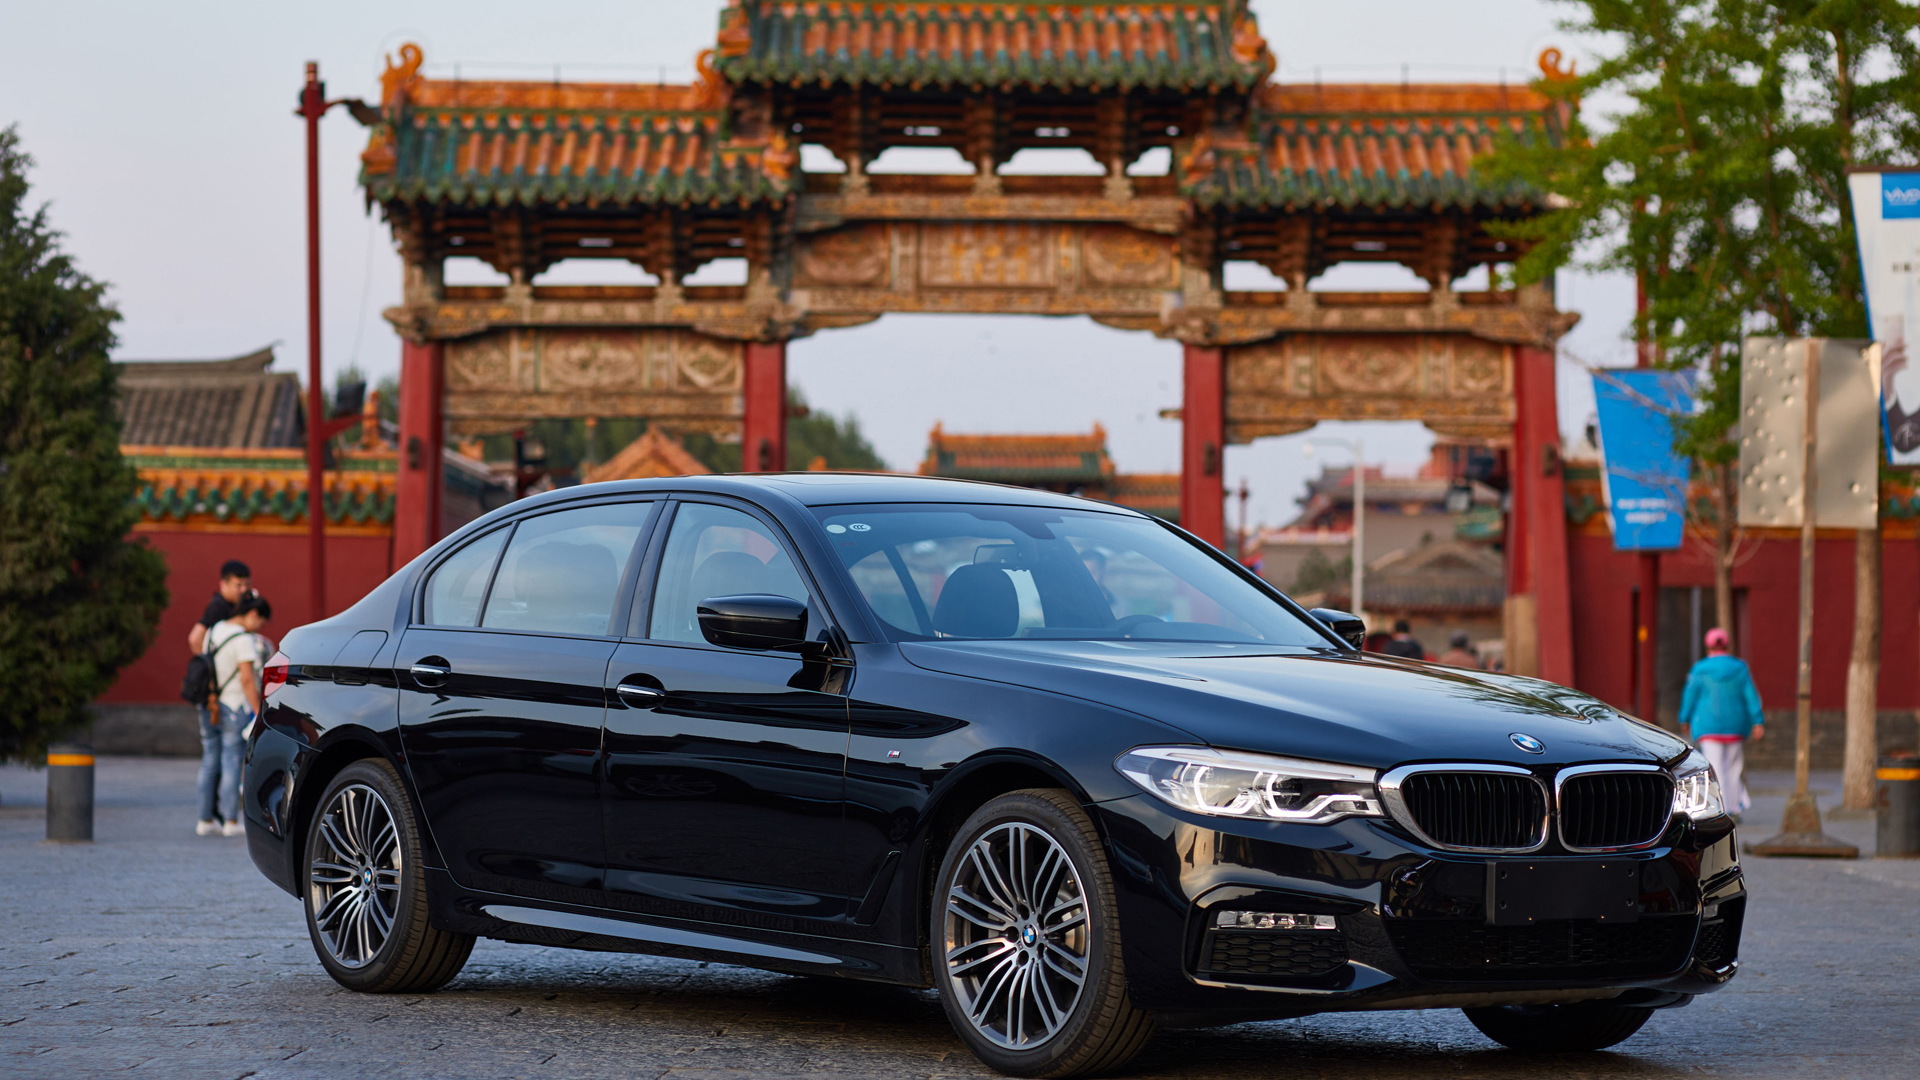 2018 BMW 5-Series built by BMW Brilliance Automotive joint venture